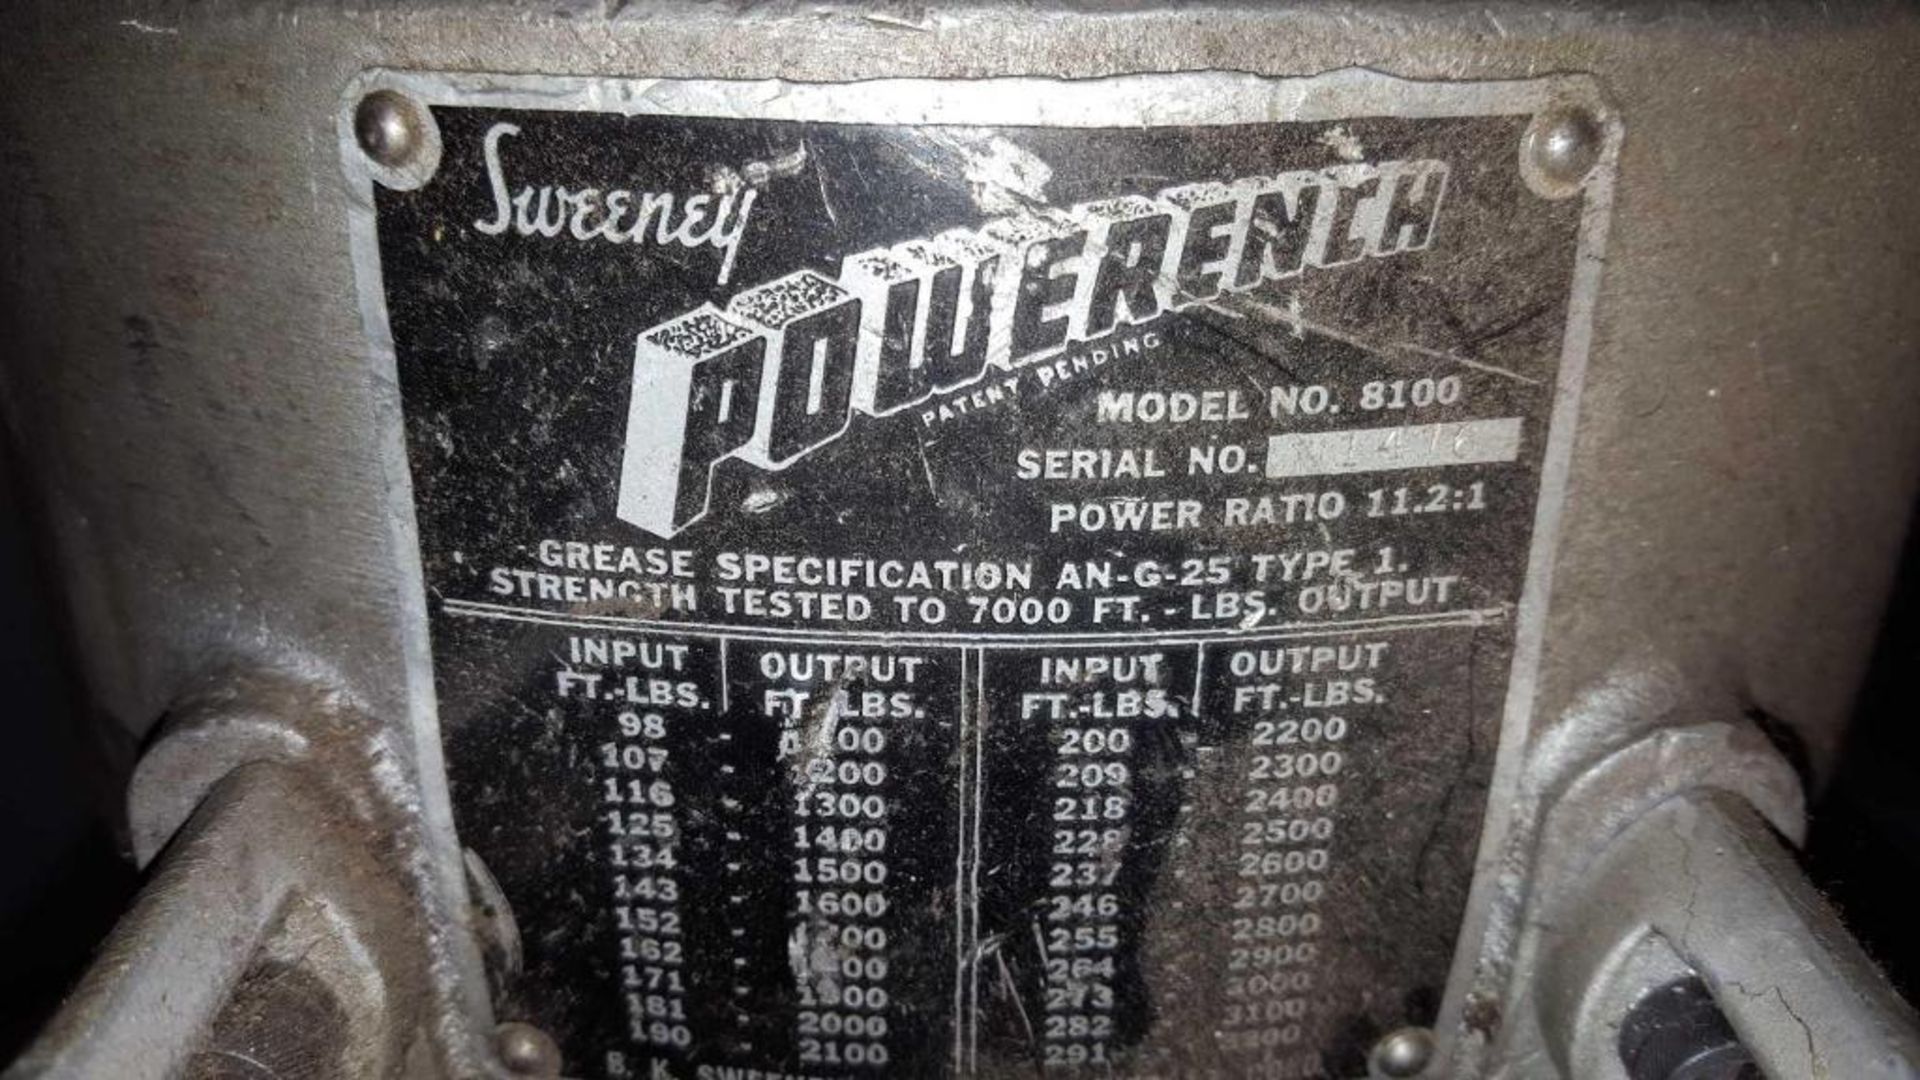 Sweeney 8100 torque multiplier Power wrench, power ratio 12.2:1, sn 1416 - Image 3 of 3